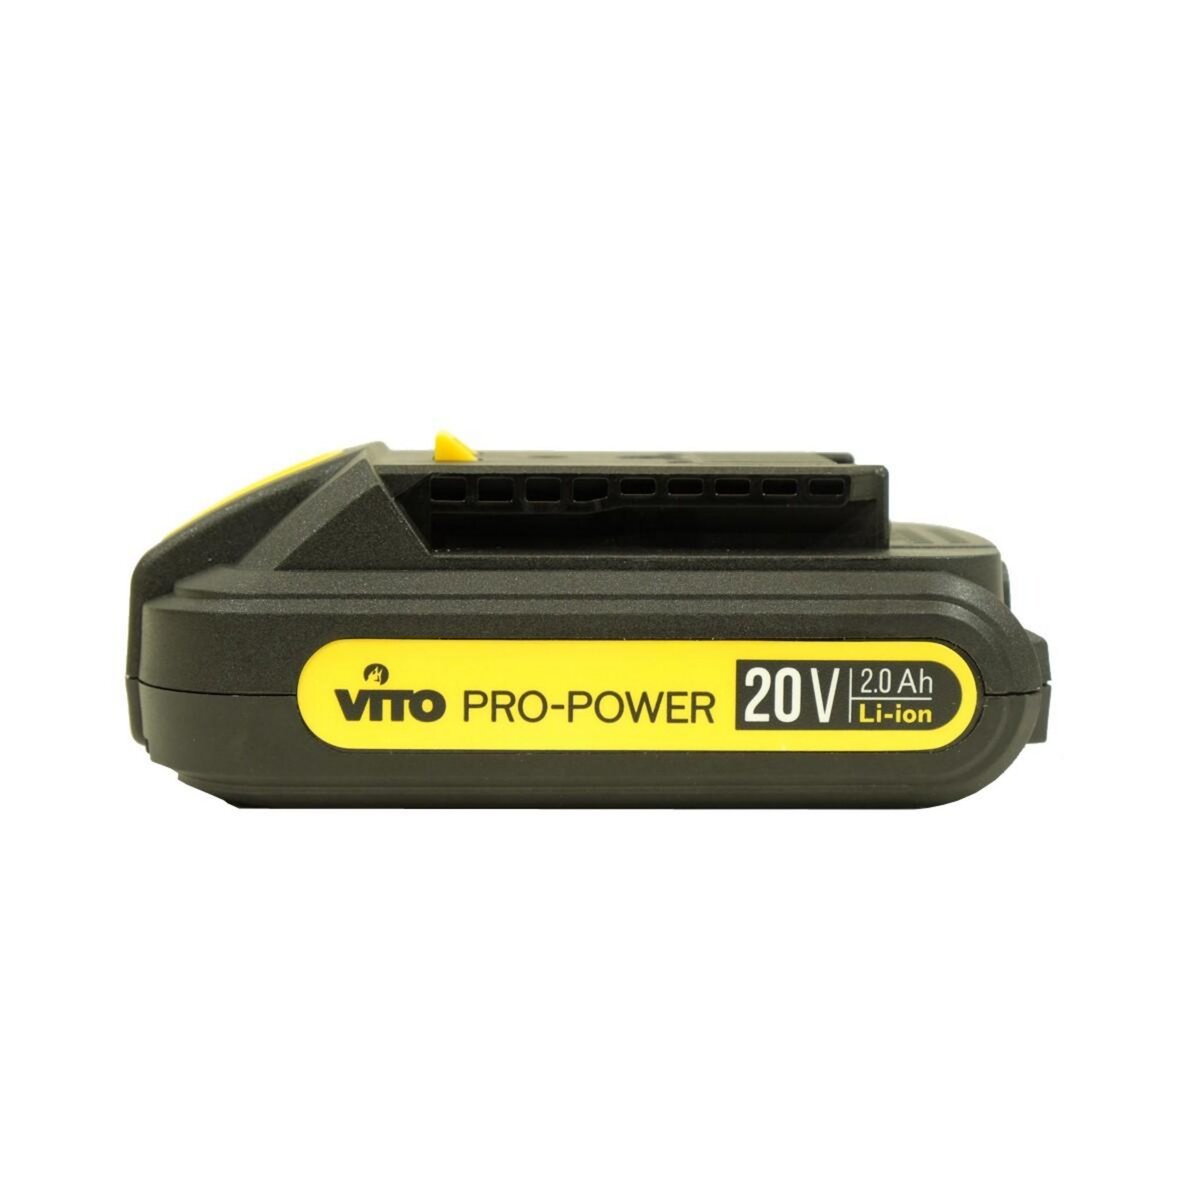 VITO Pro-Power Batterie lithium 2 Ah sans fil 20V Gamme VITO ego